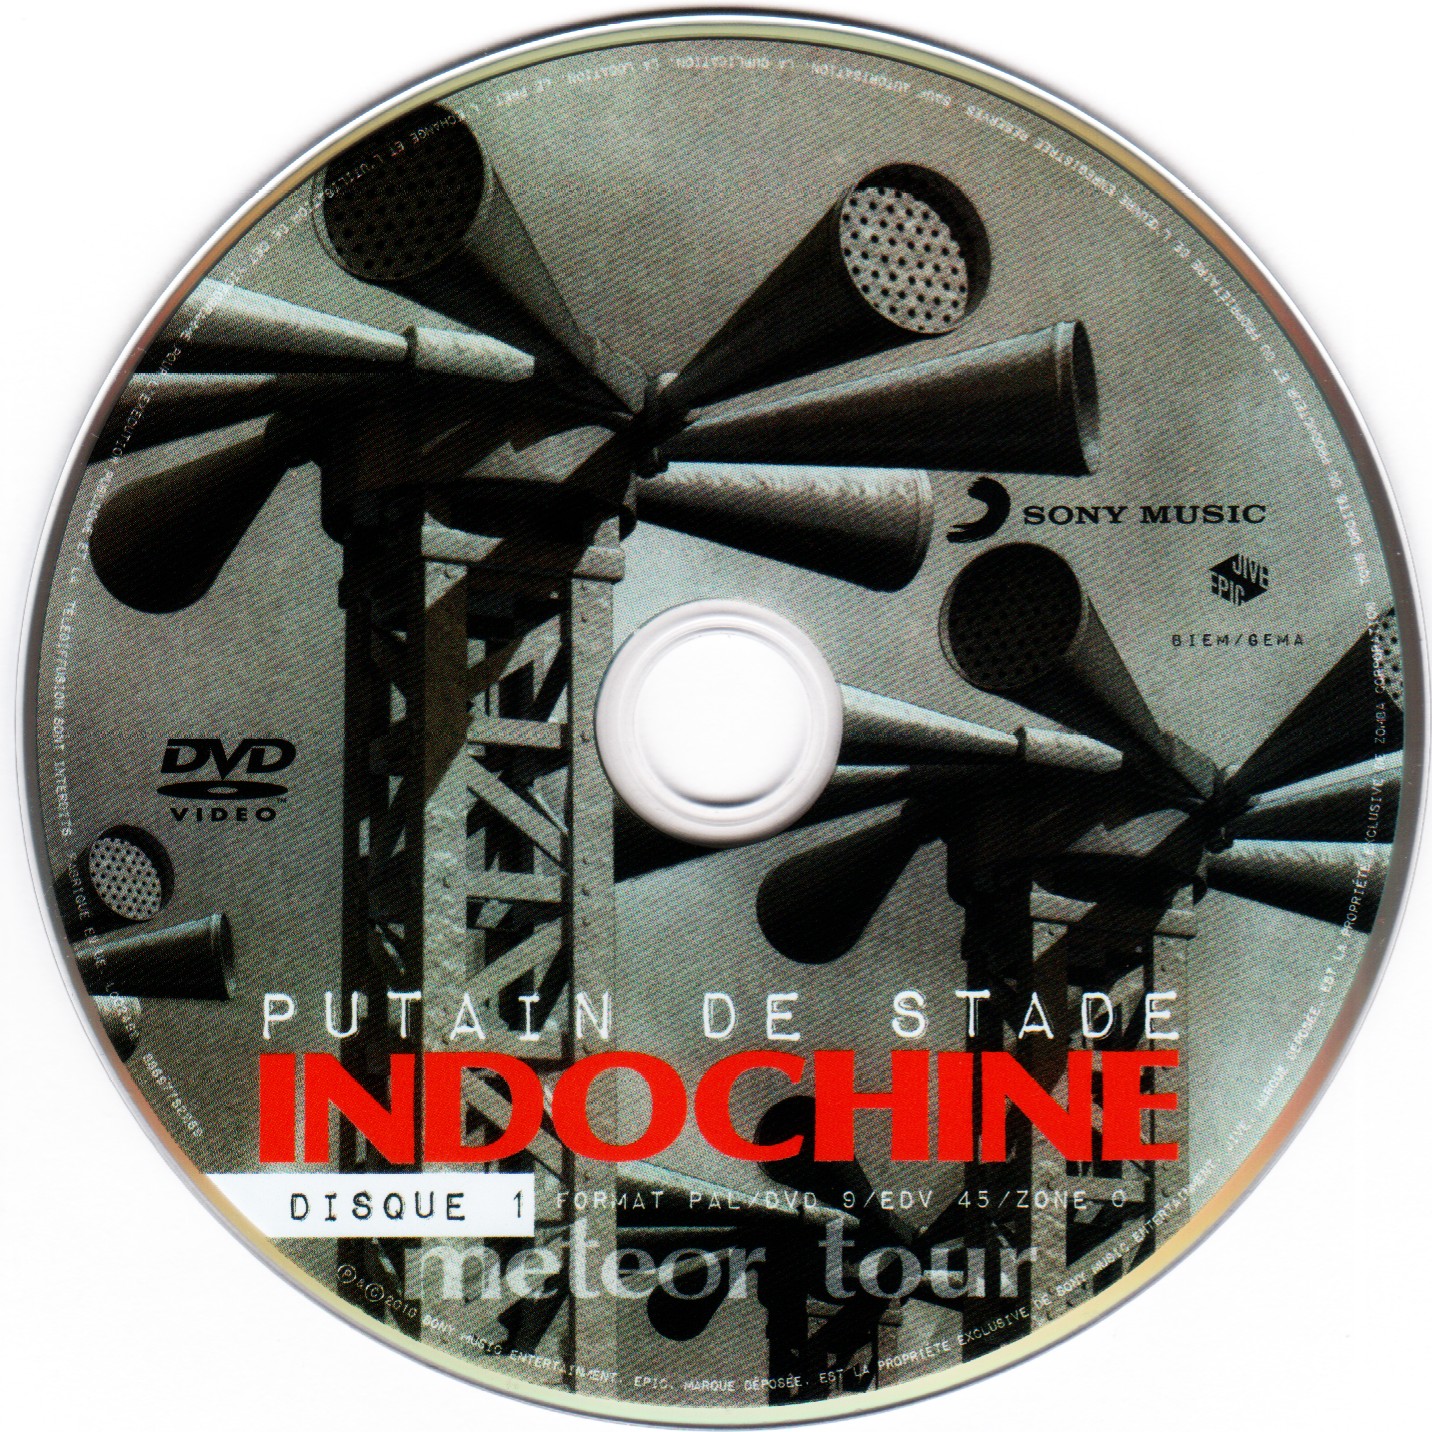 Indochine - Putain de stade DISC 1